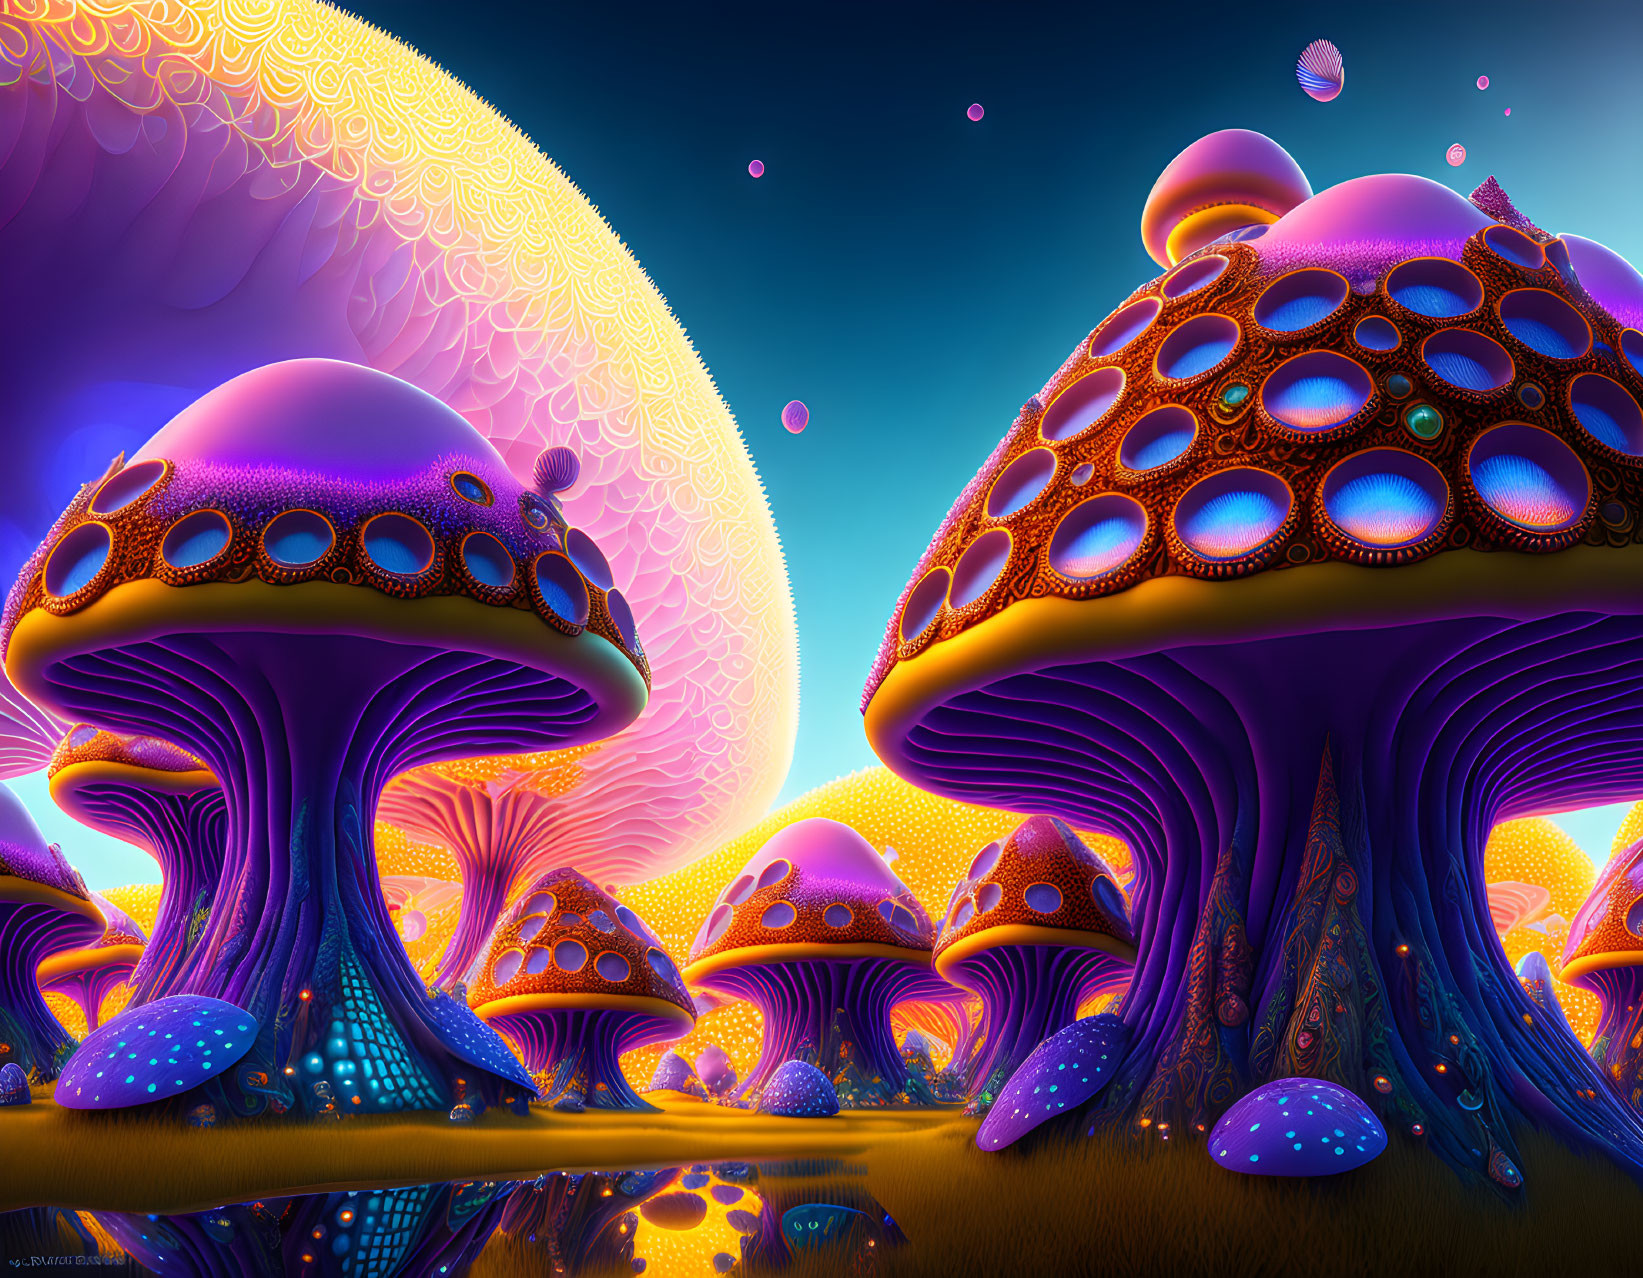  Fantasy biomorphic mushroom houses…